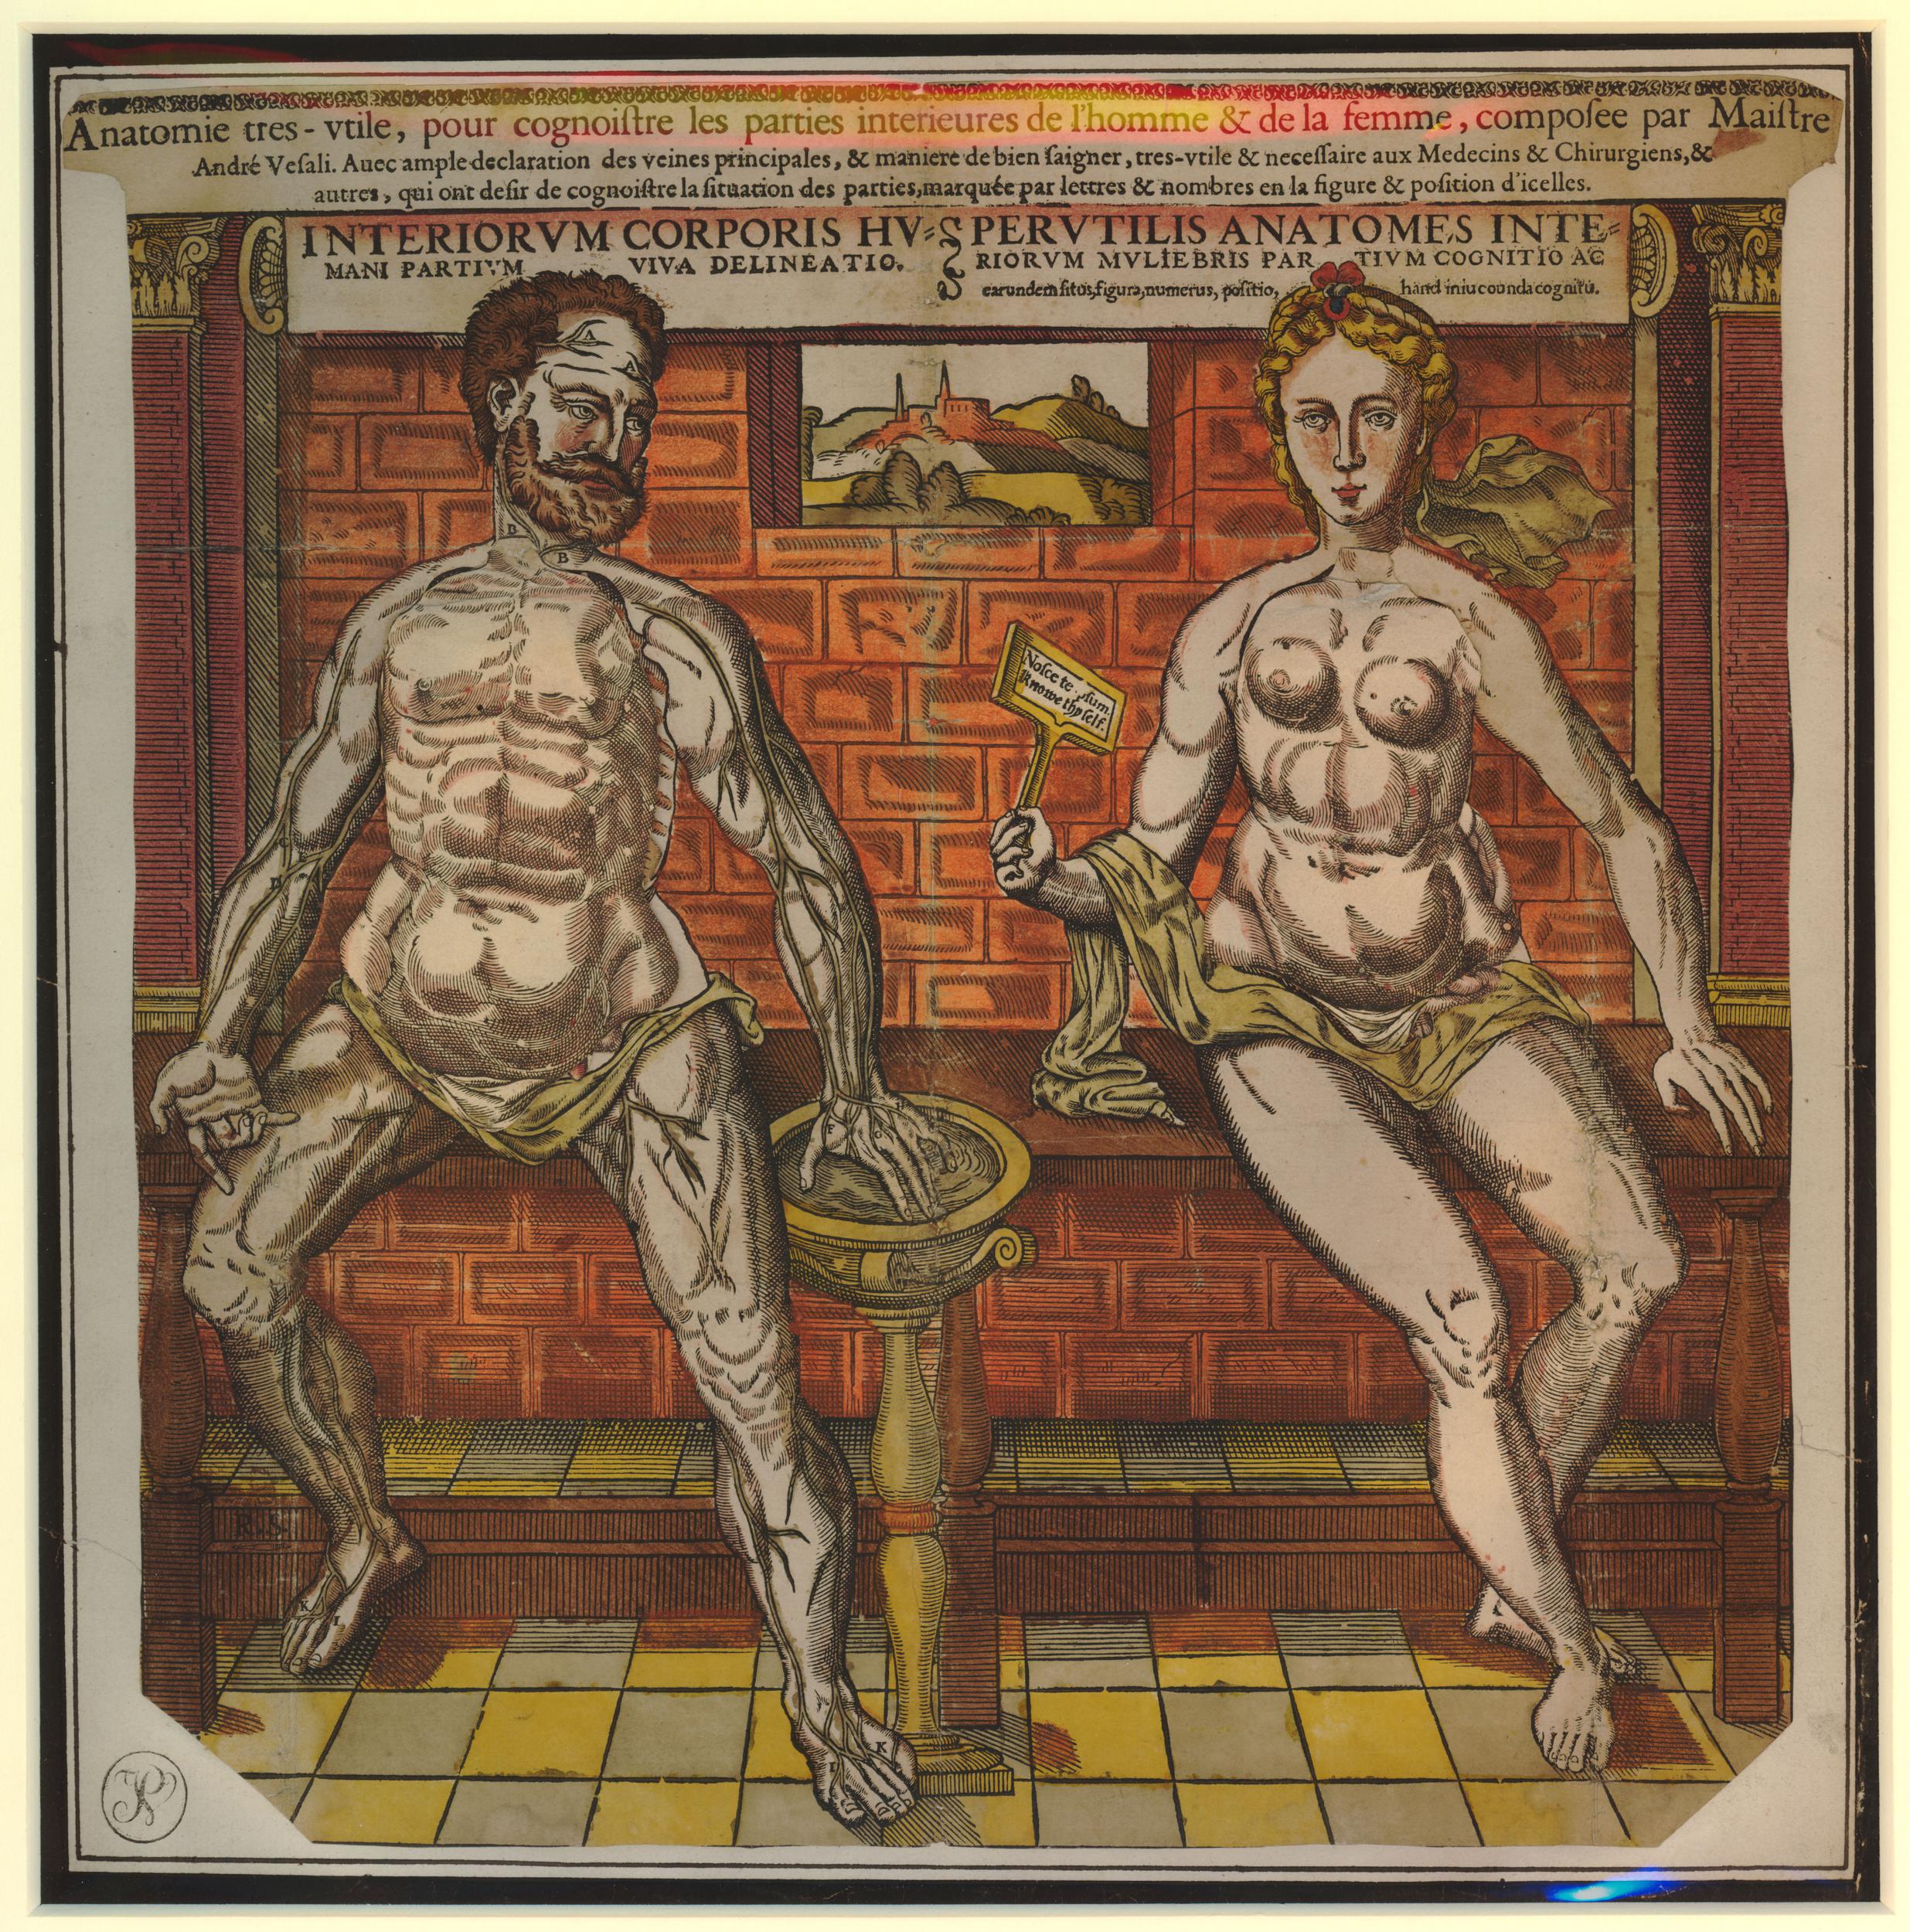 1547-68 Anatomie tres-utile edite par Gyles Godet (c) The Trustees of the British Museum A